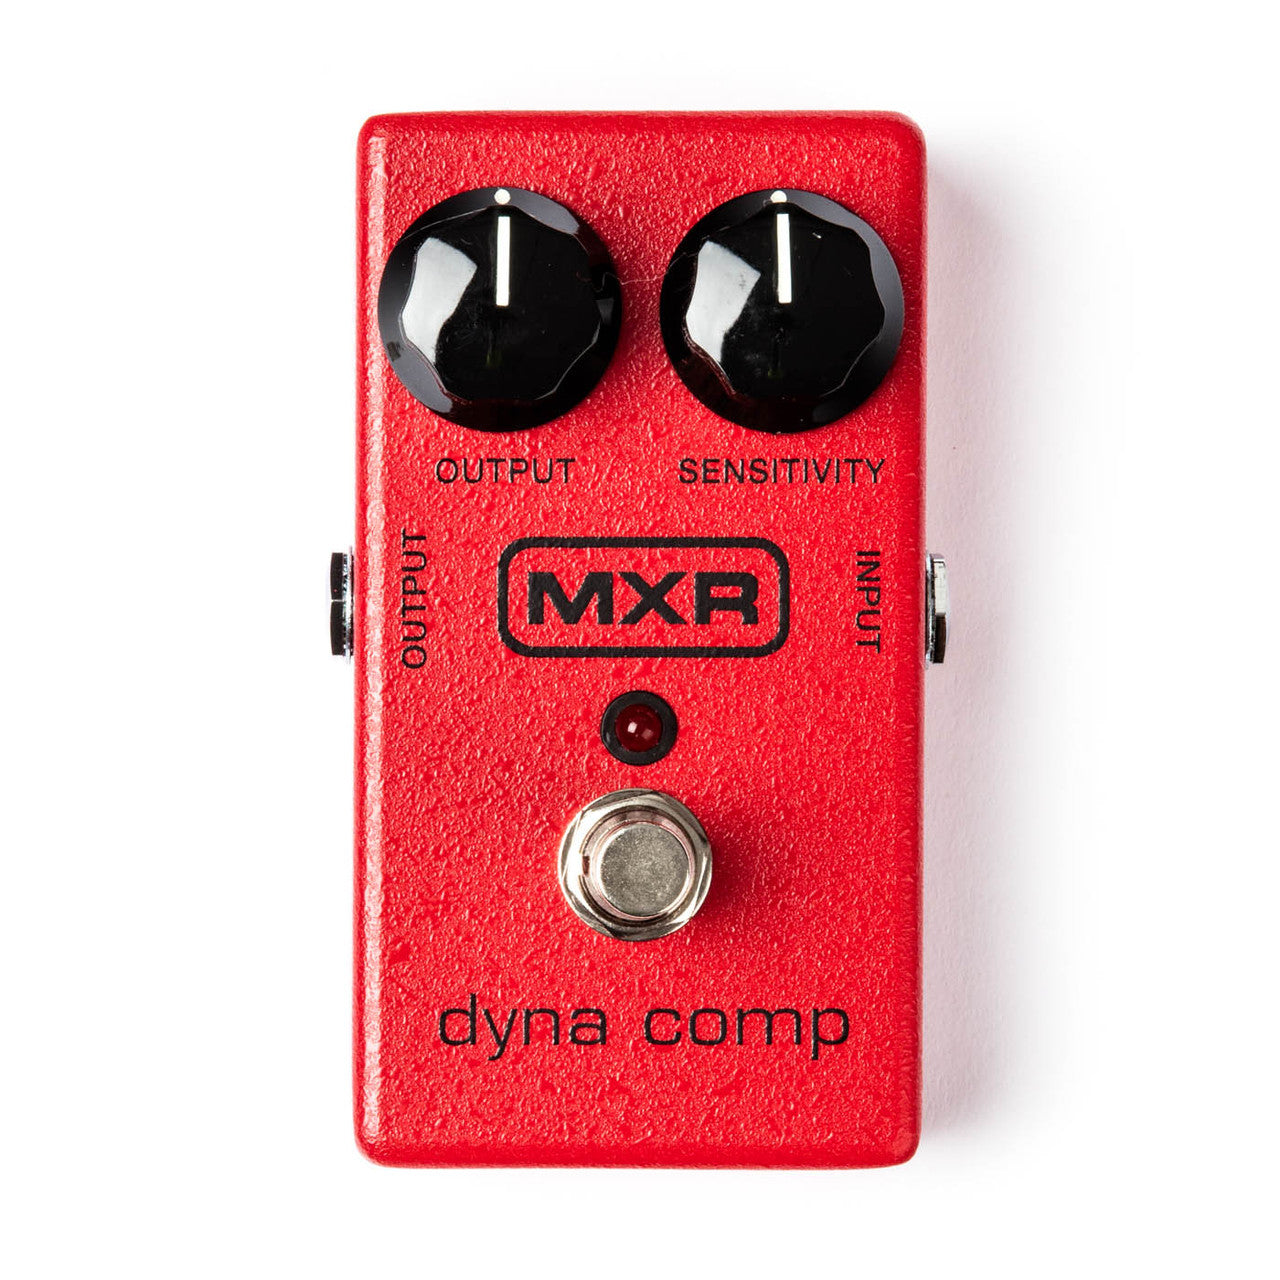 Dunlop MXR M102 Dyna Comp Compressor Guitar Effect Pedal + FREE Supro 20' Cable